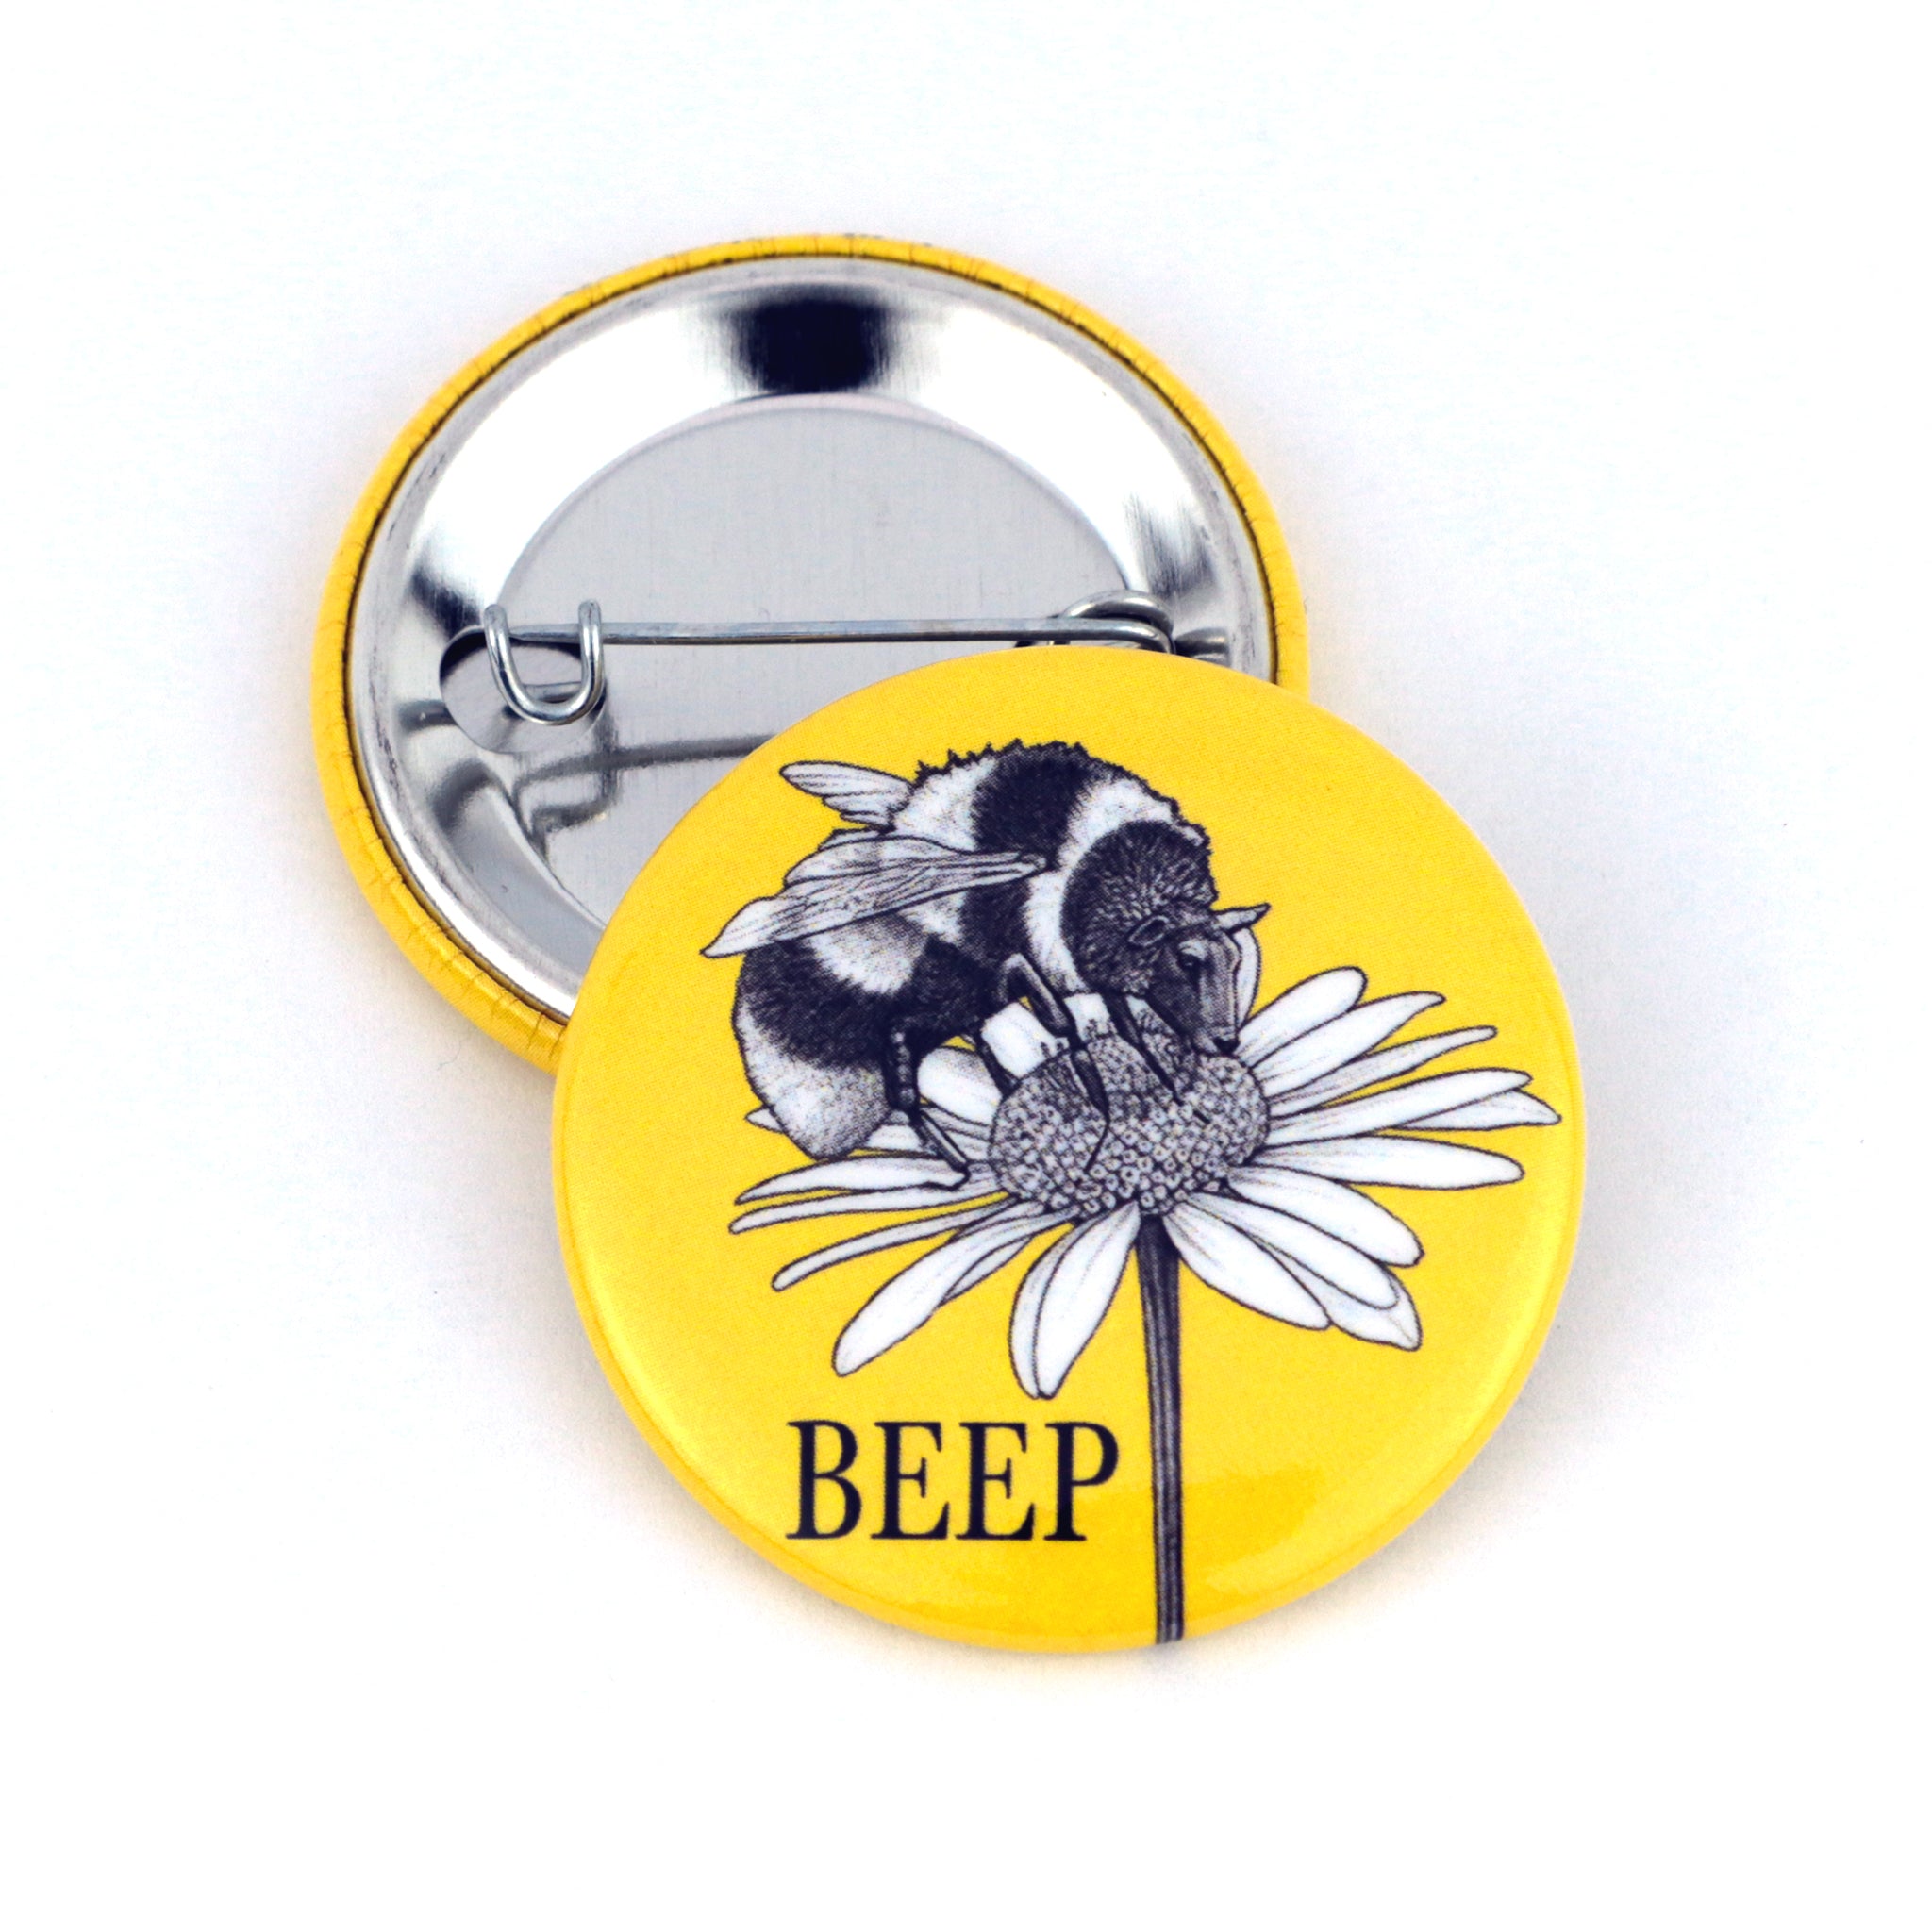 Beep | Bee + Sheep Hybrid Animal | 1.5" Pinback Button